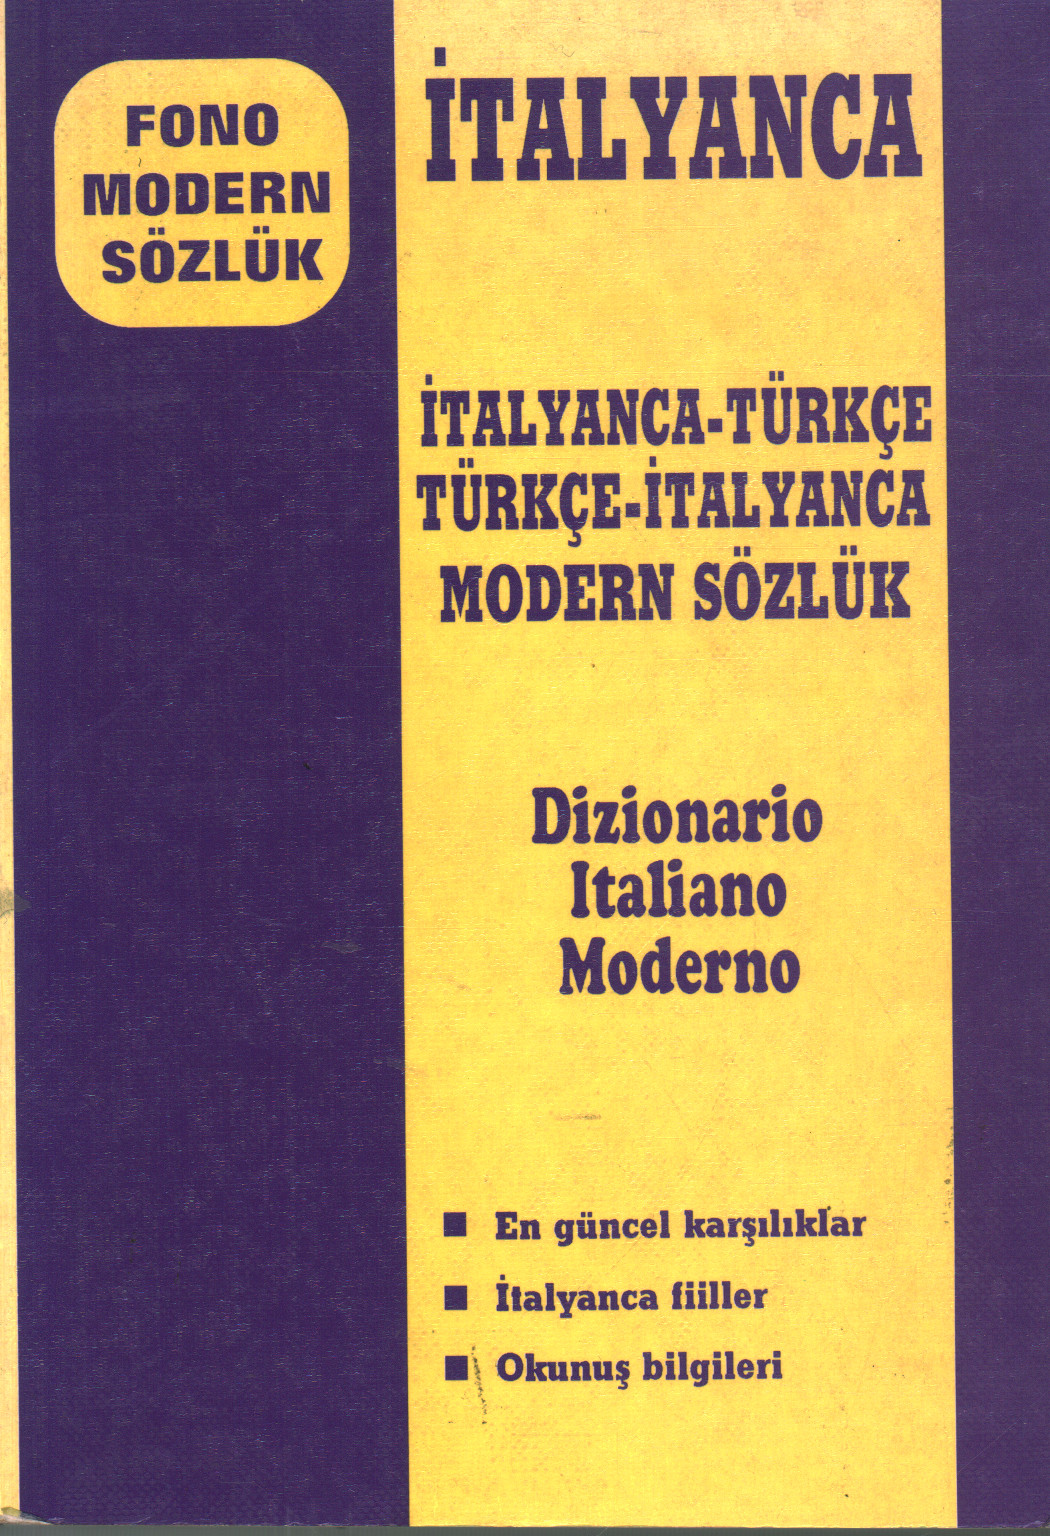 Moderno Sozluk Italyanca-Türkçe/Türkçe Italyanca, Birsen Cankaya Neval Barlas, Renato, Luciano